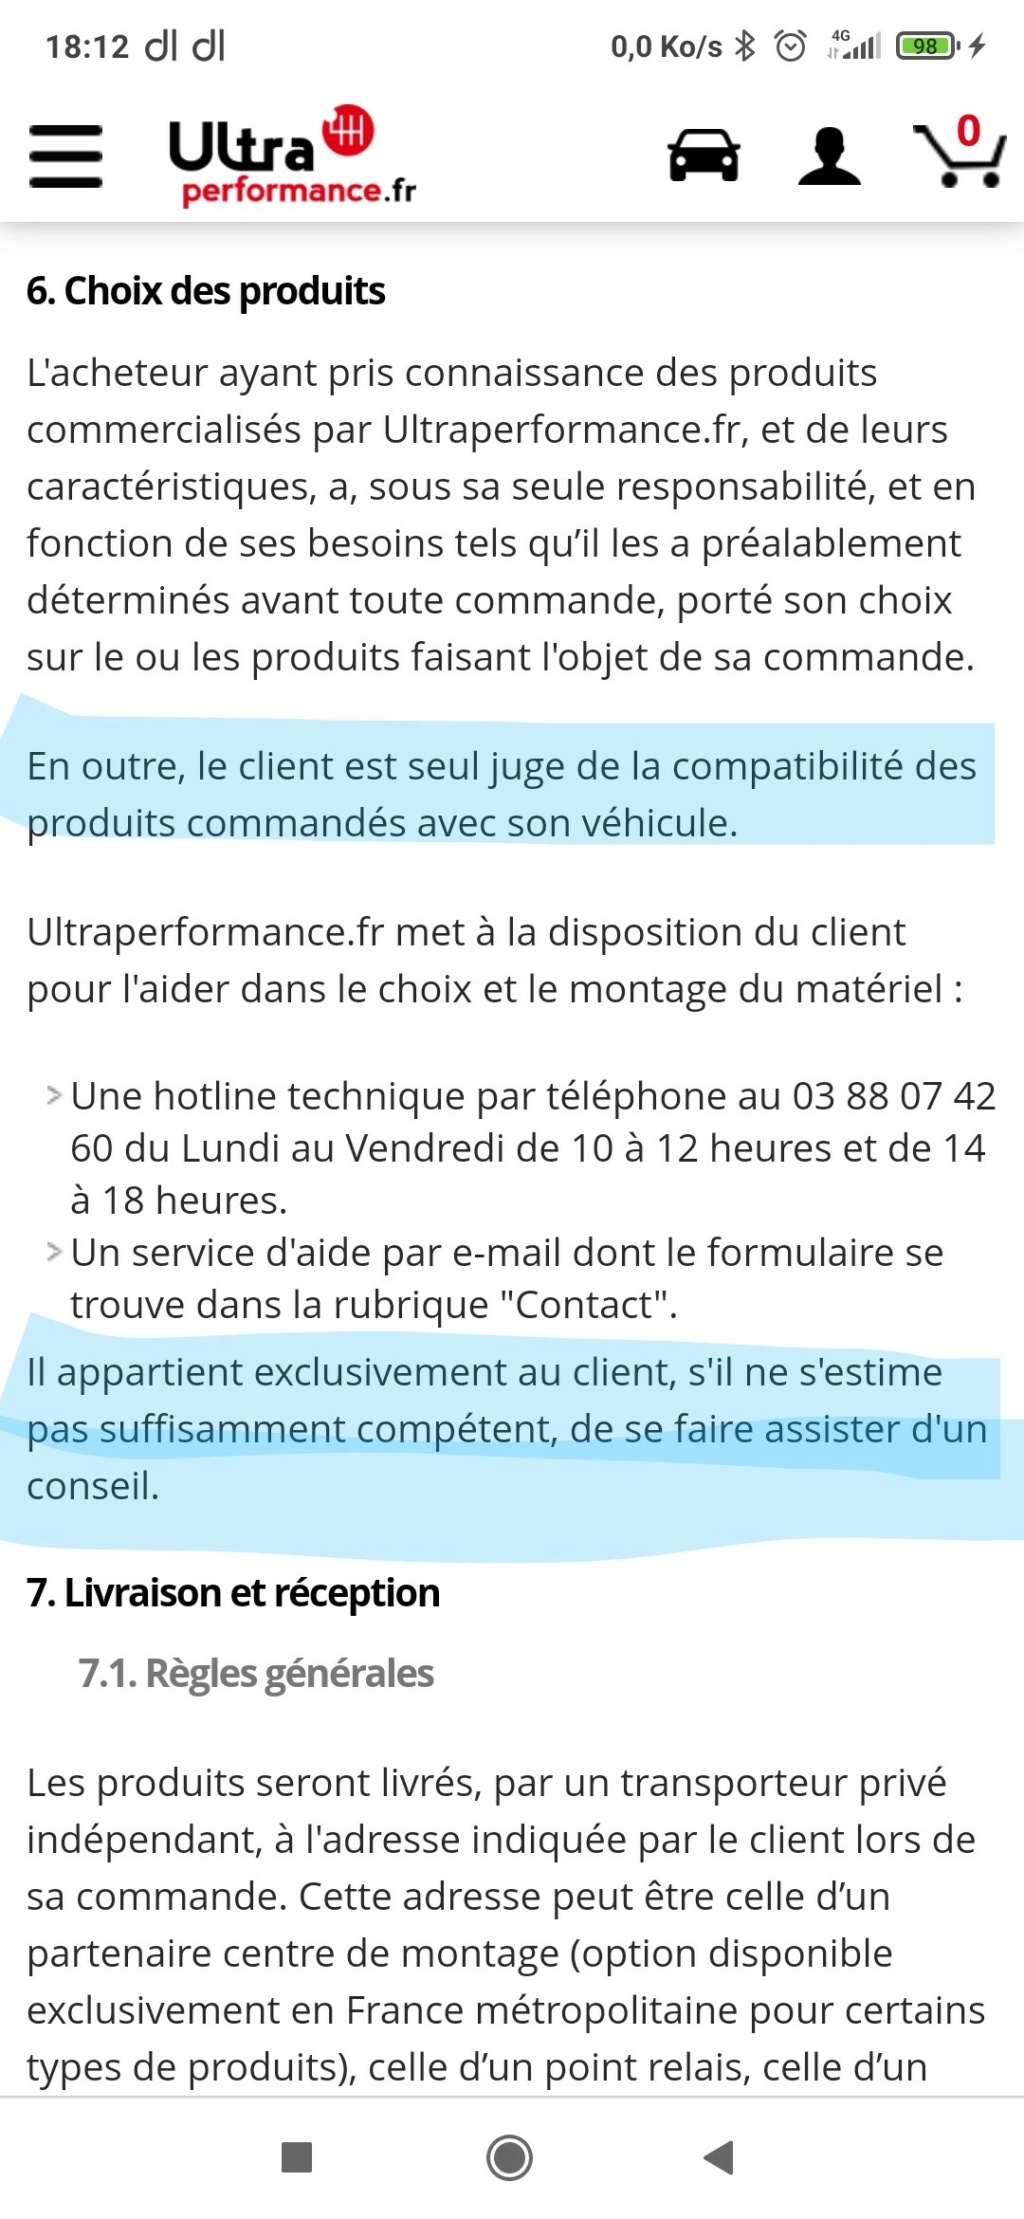 Problème avec Ultra Performance.fr  :-( - Page 2 Screen10